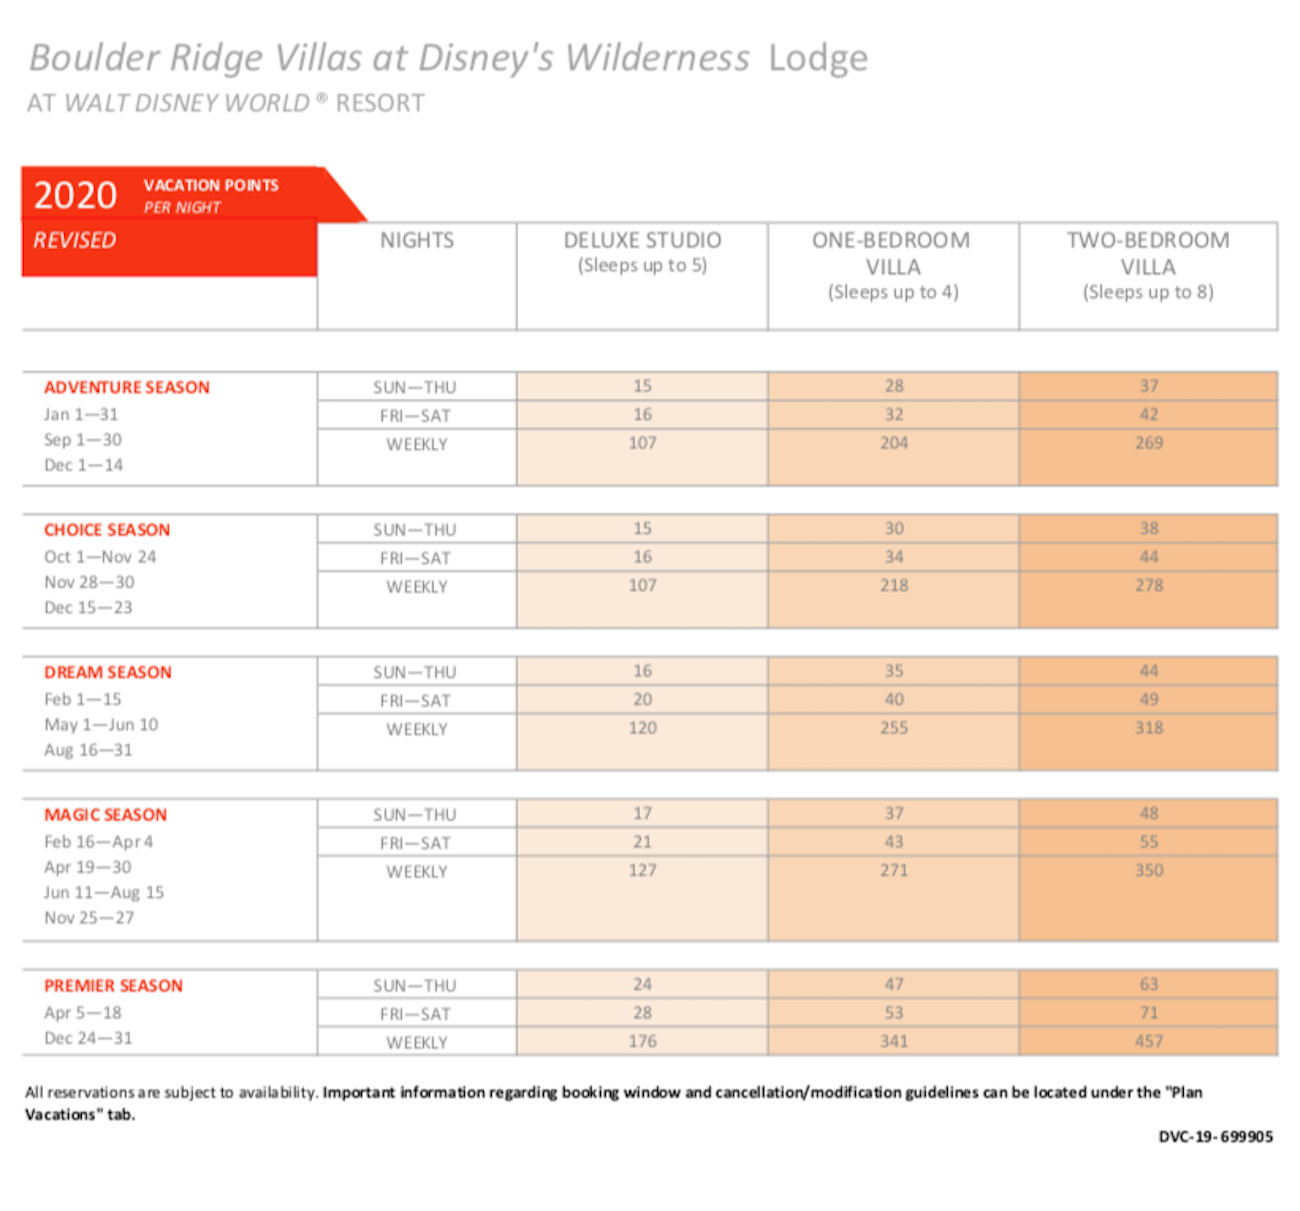 Boulder Ridge Villas 2020